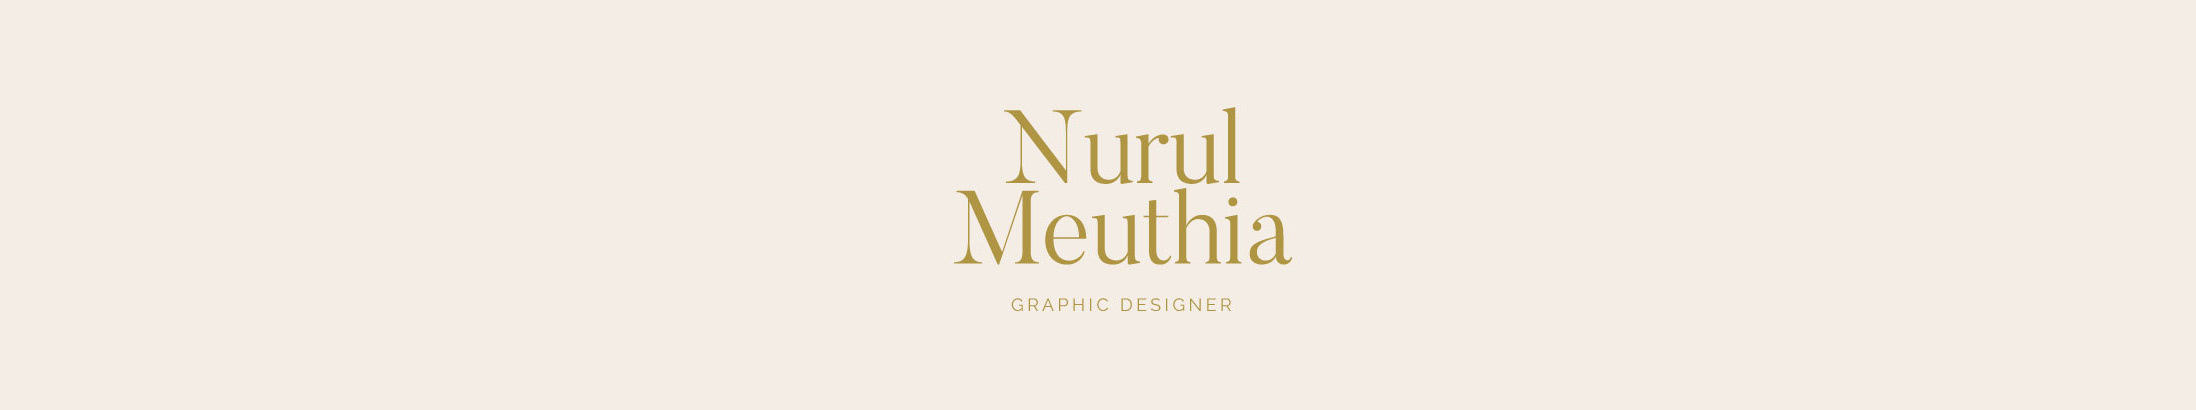 Nurul Meuthias profilbanner